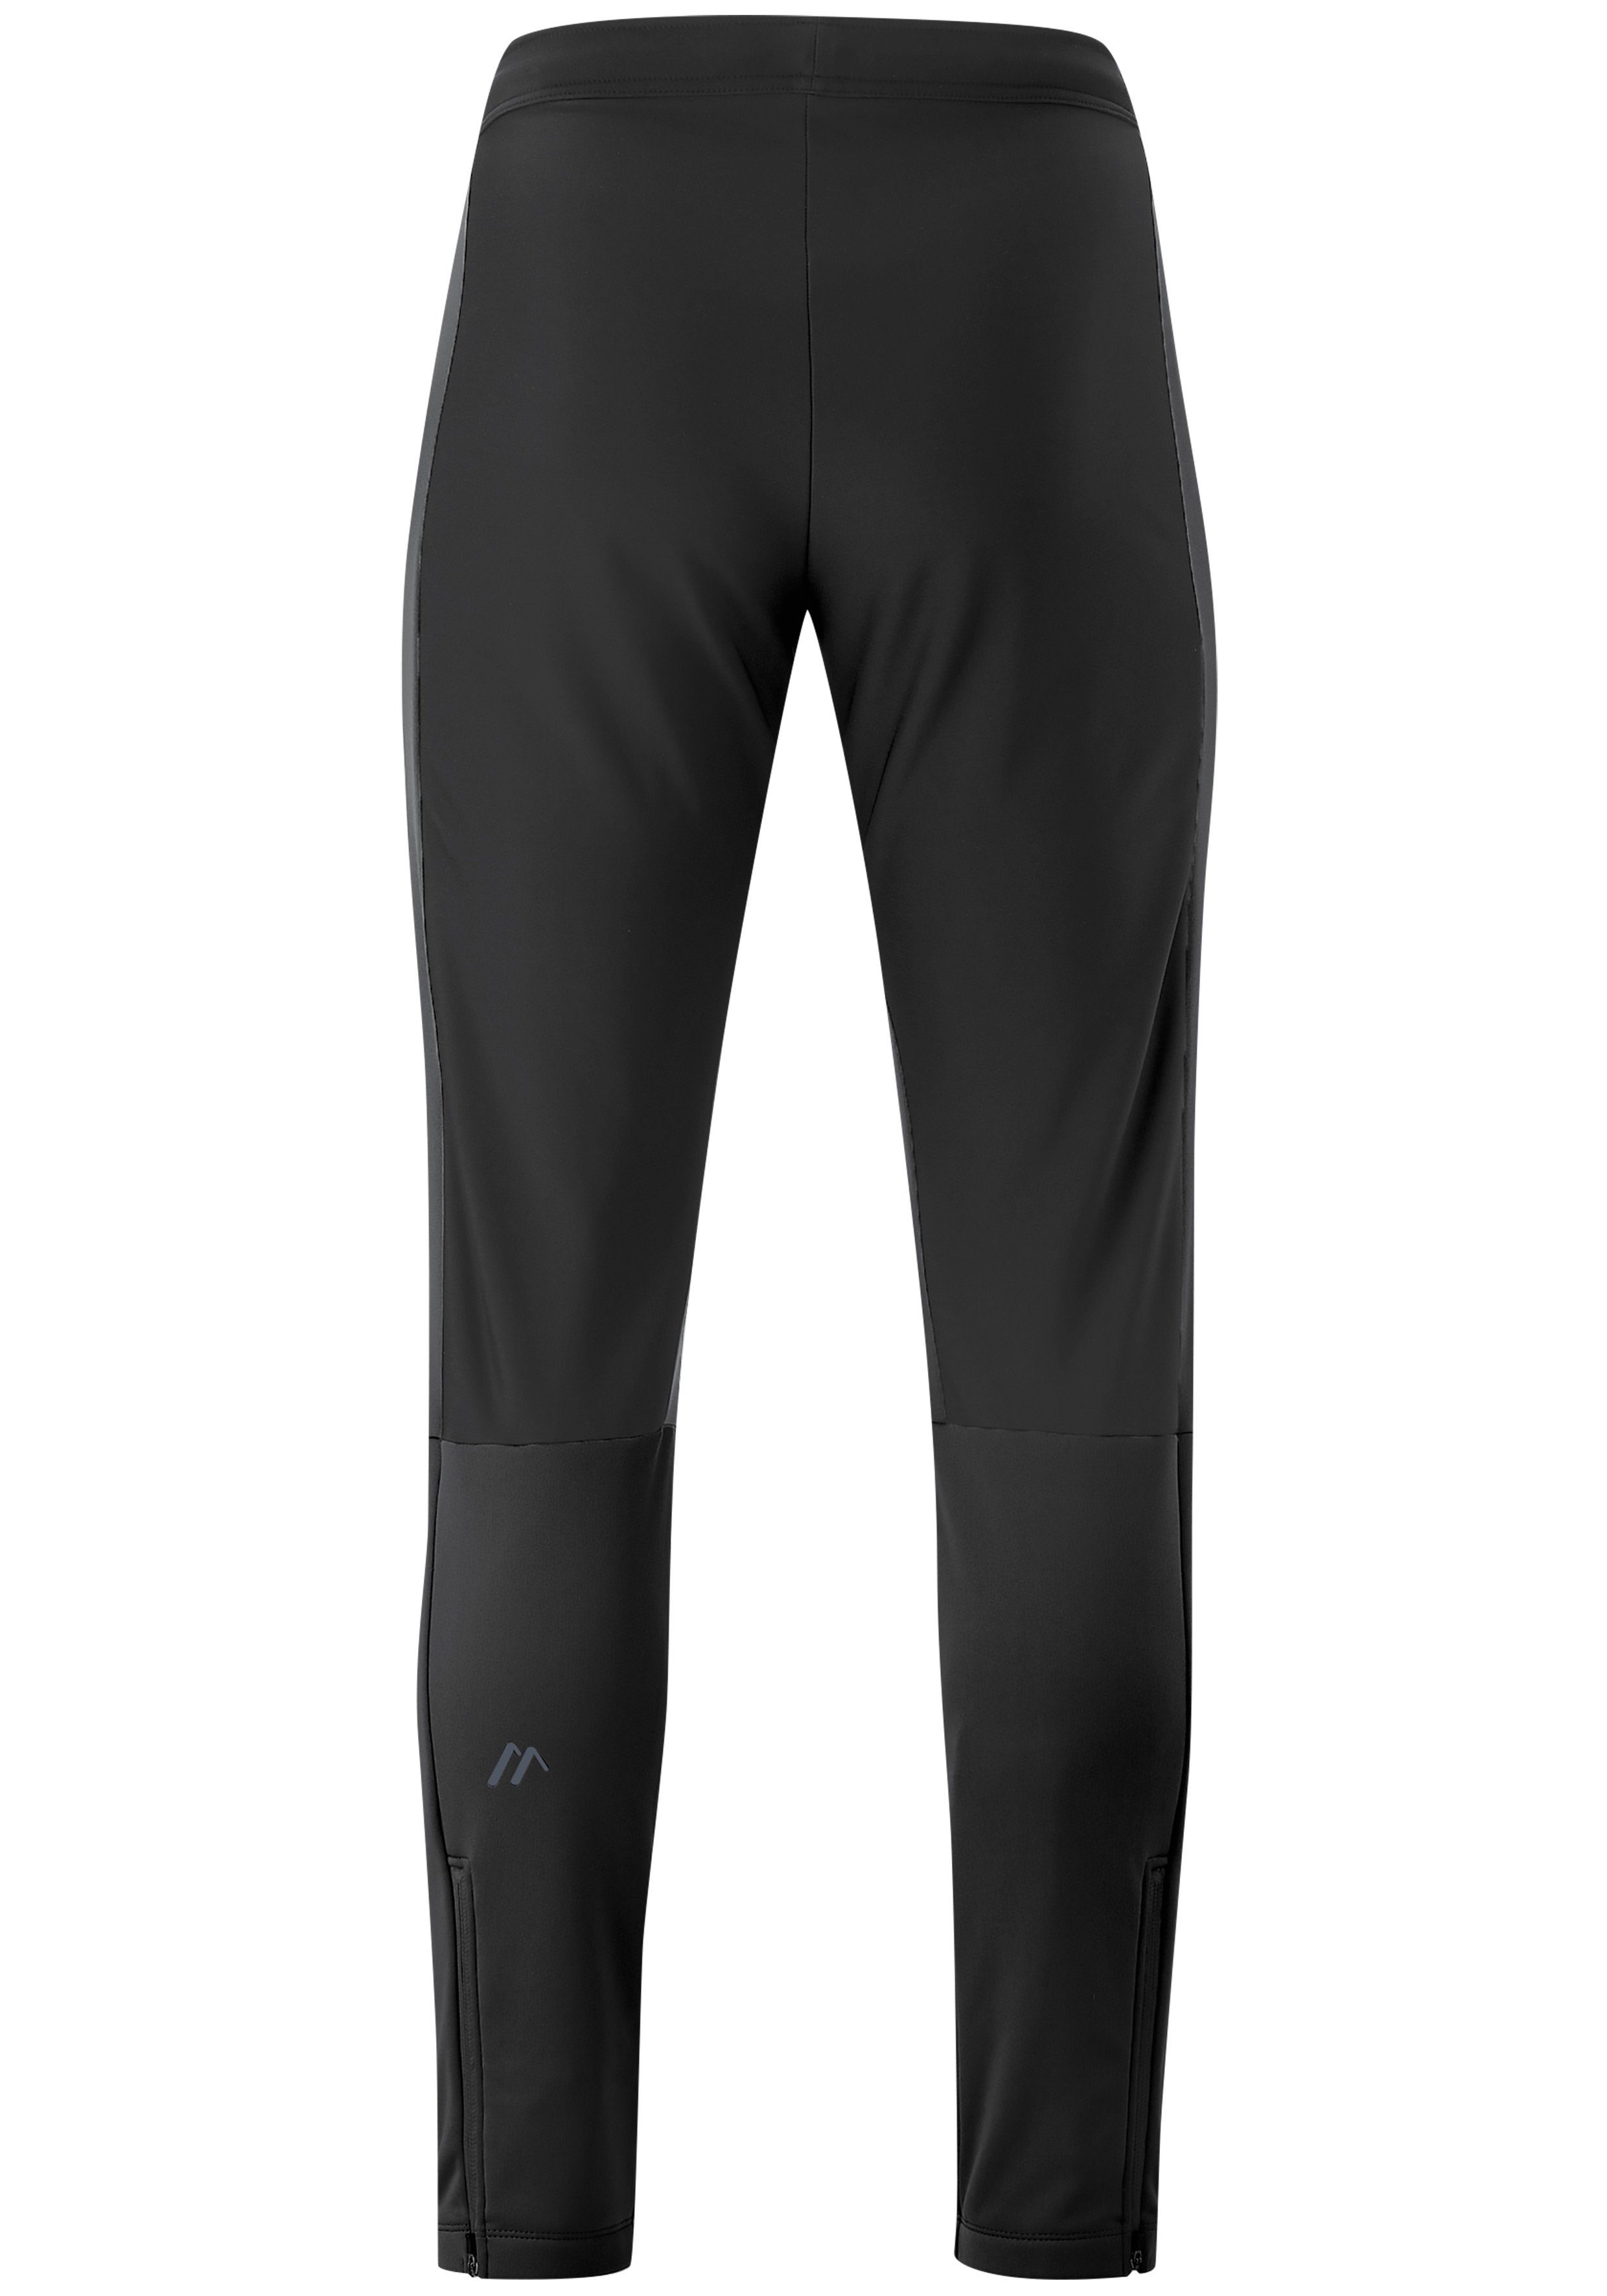 Slim-Fit Softshellhose modernen Sports Schnitt in komfortable Pants M Malselv Maier Softshell-Hose dunkelgrau